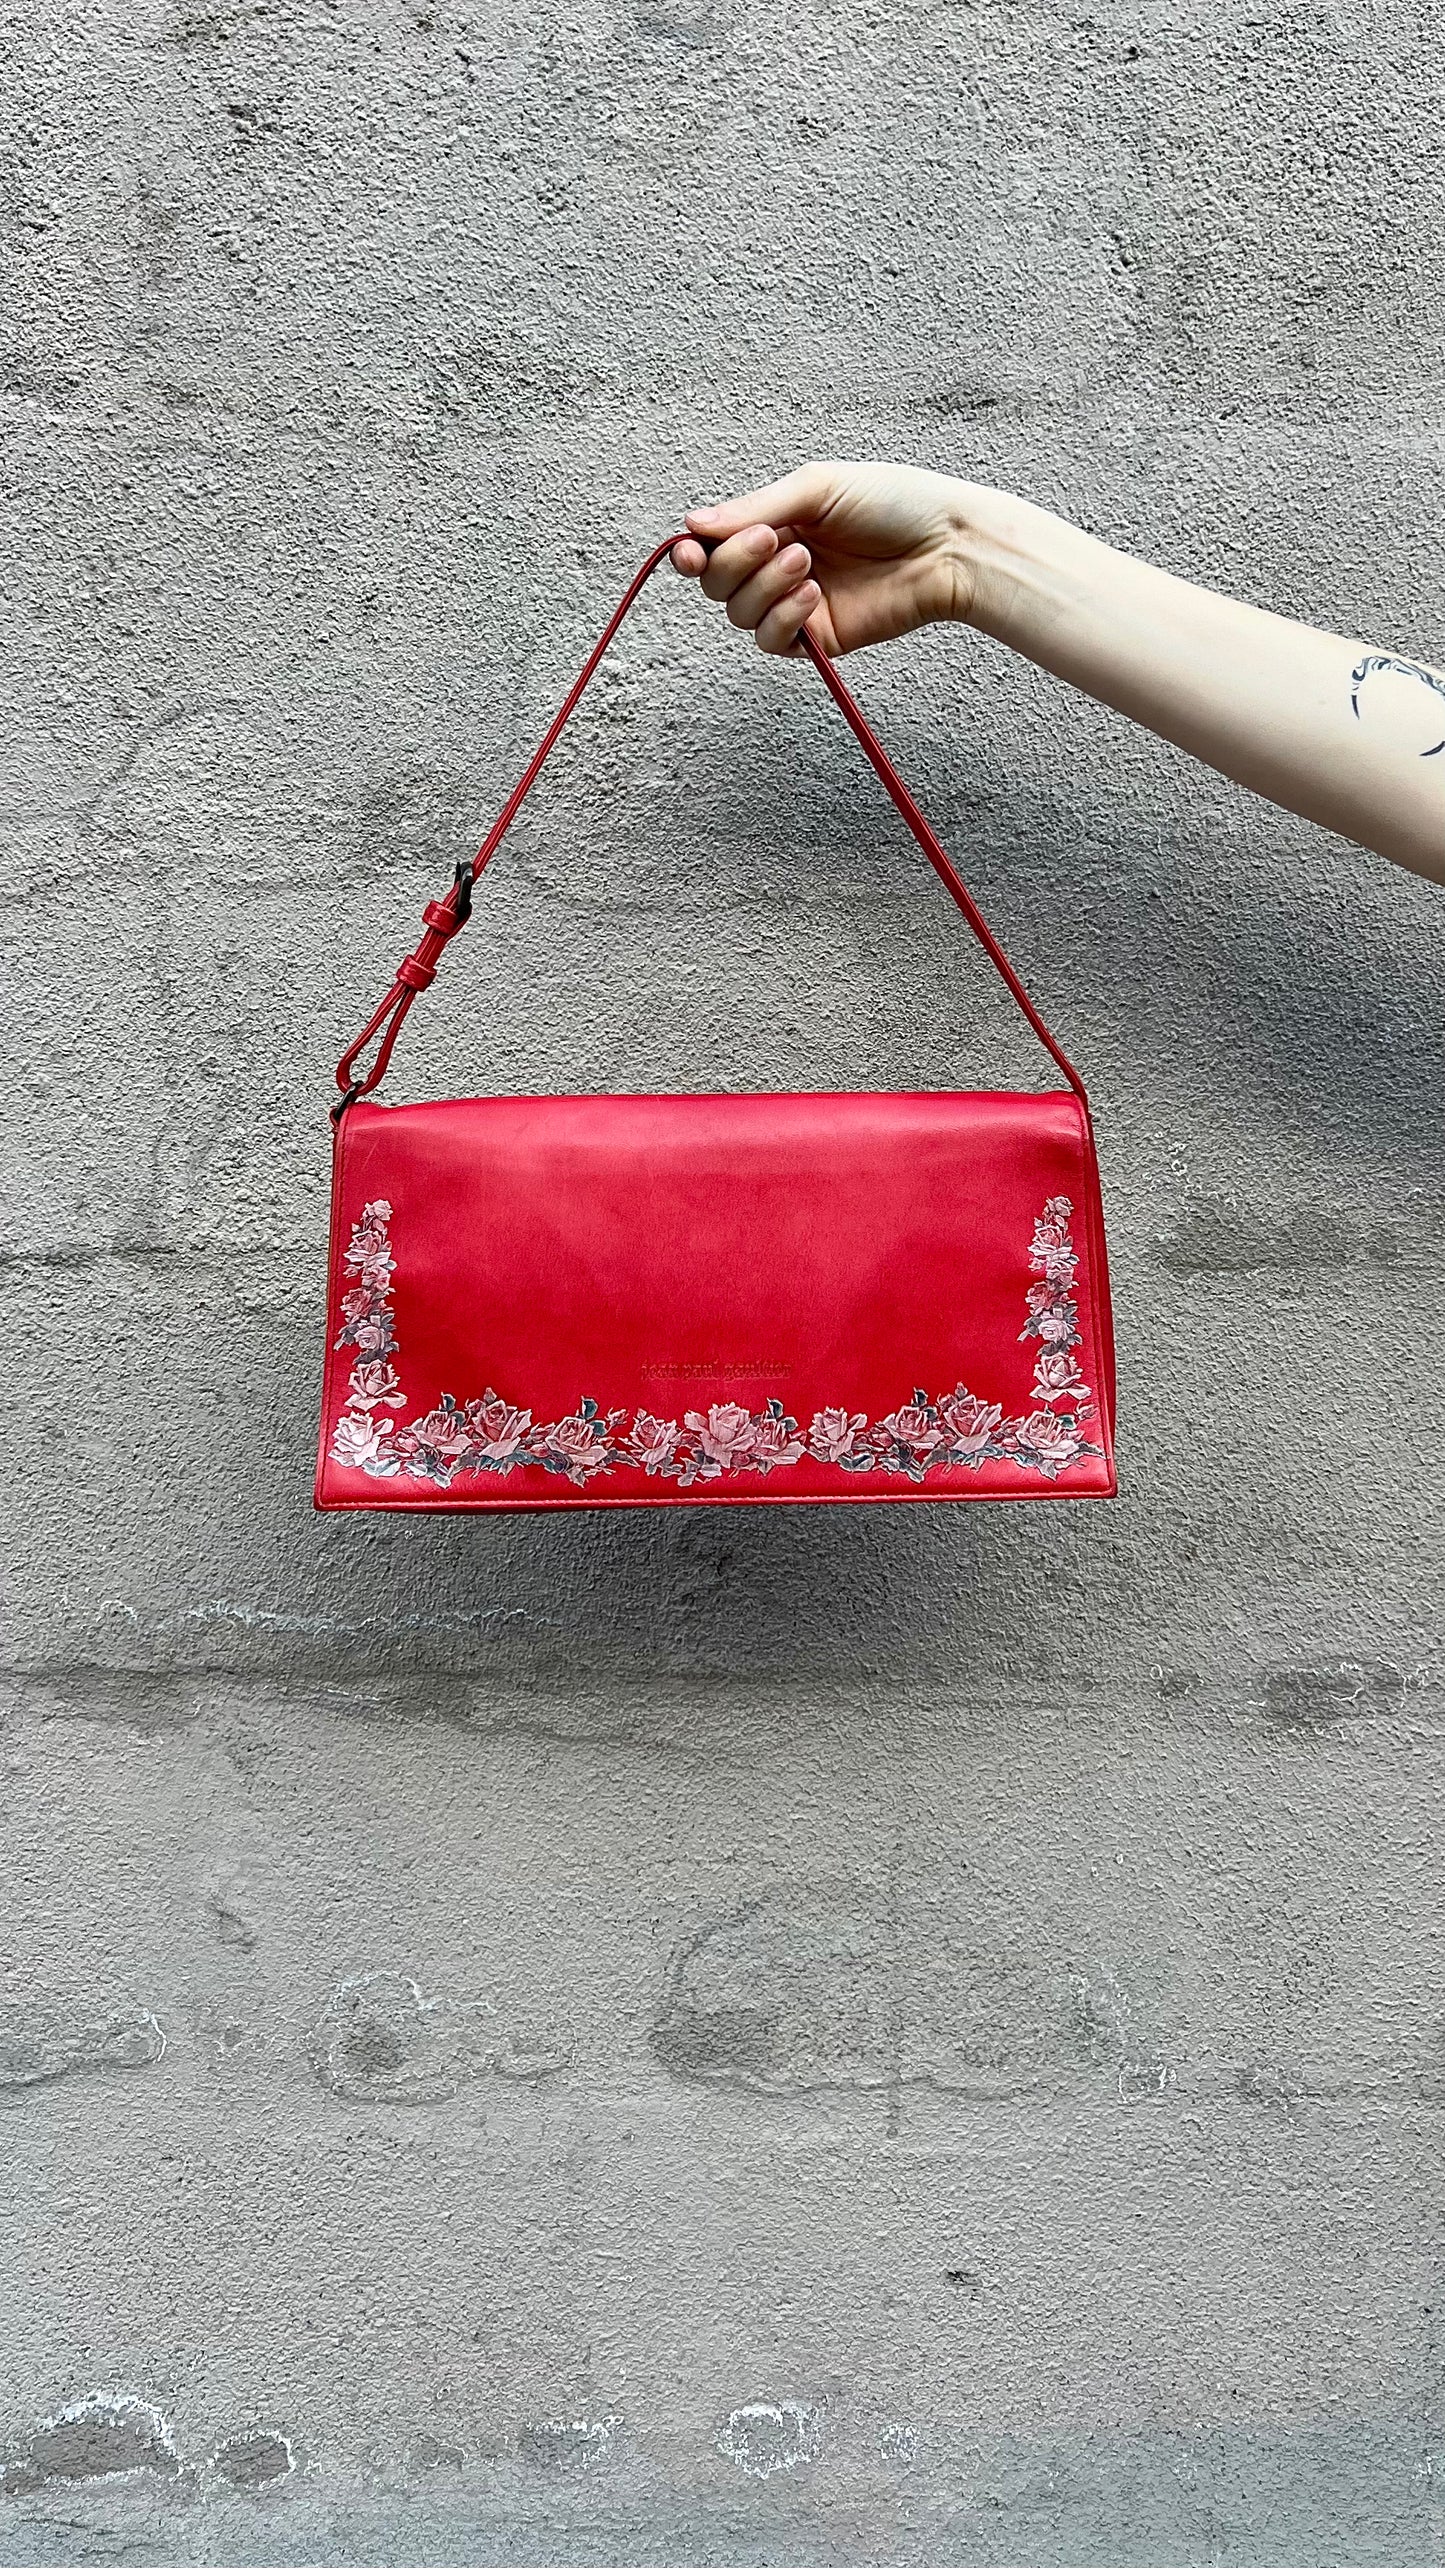 Jean Paul Gaultier Red Floral Bag